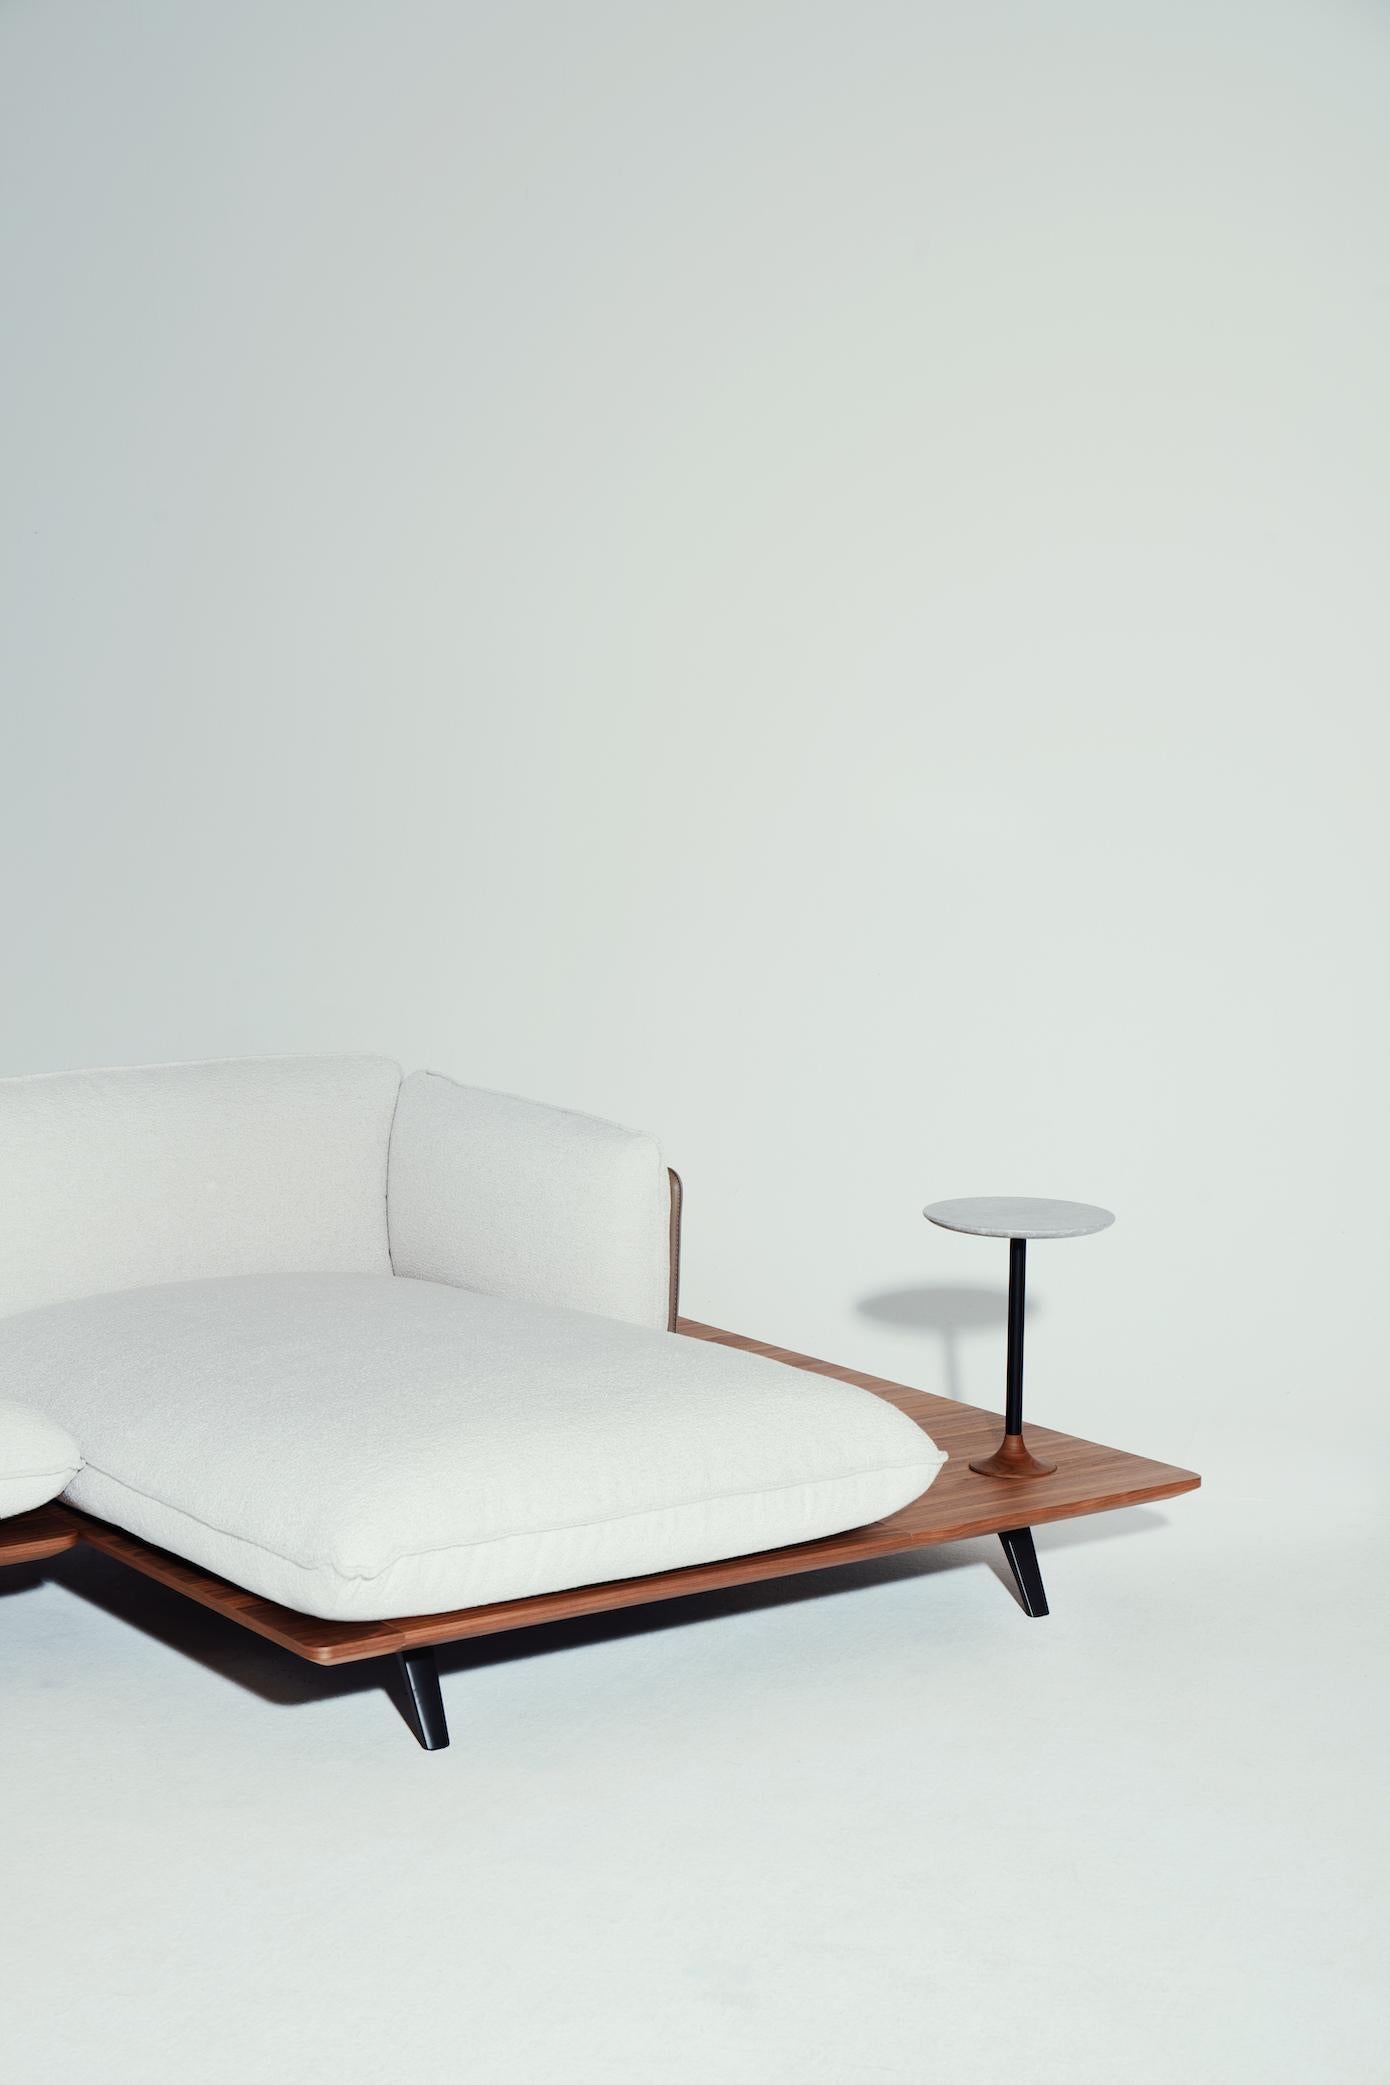 Anpassbares La Manufacture-Paris Sahara Sofa Design von Noé Duchaufour-Lawrance im Angebot 1